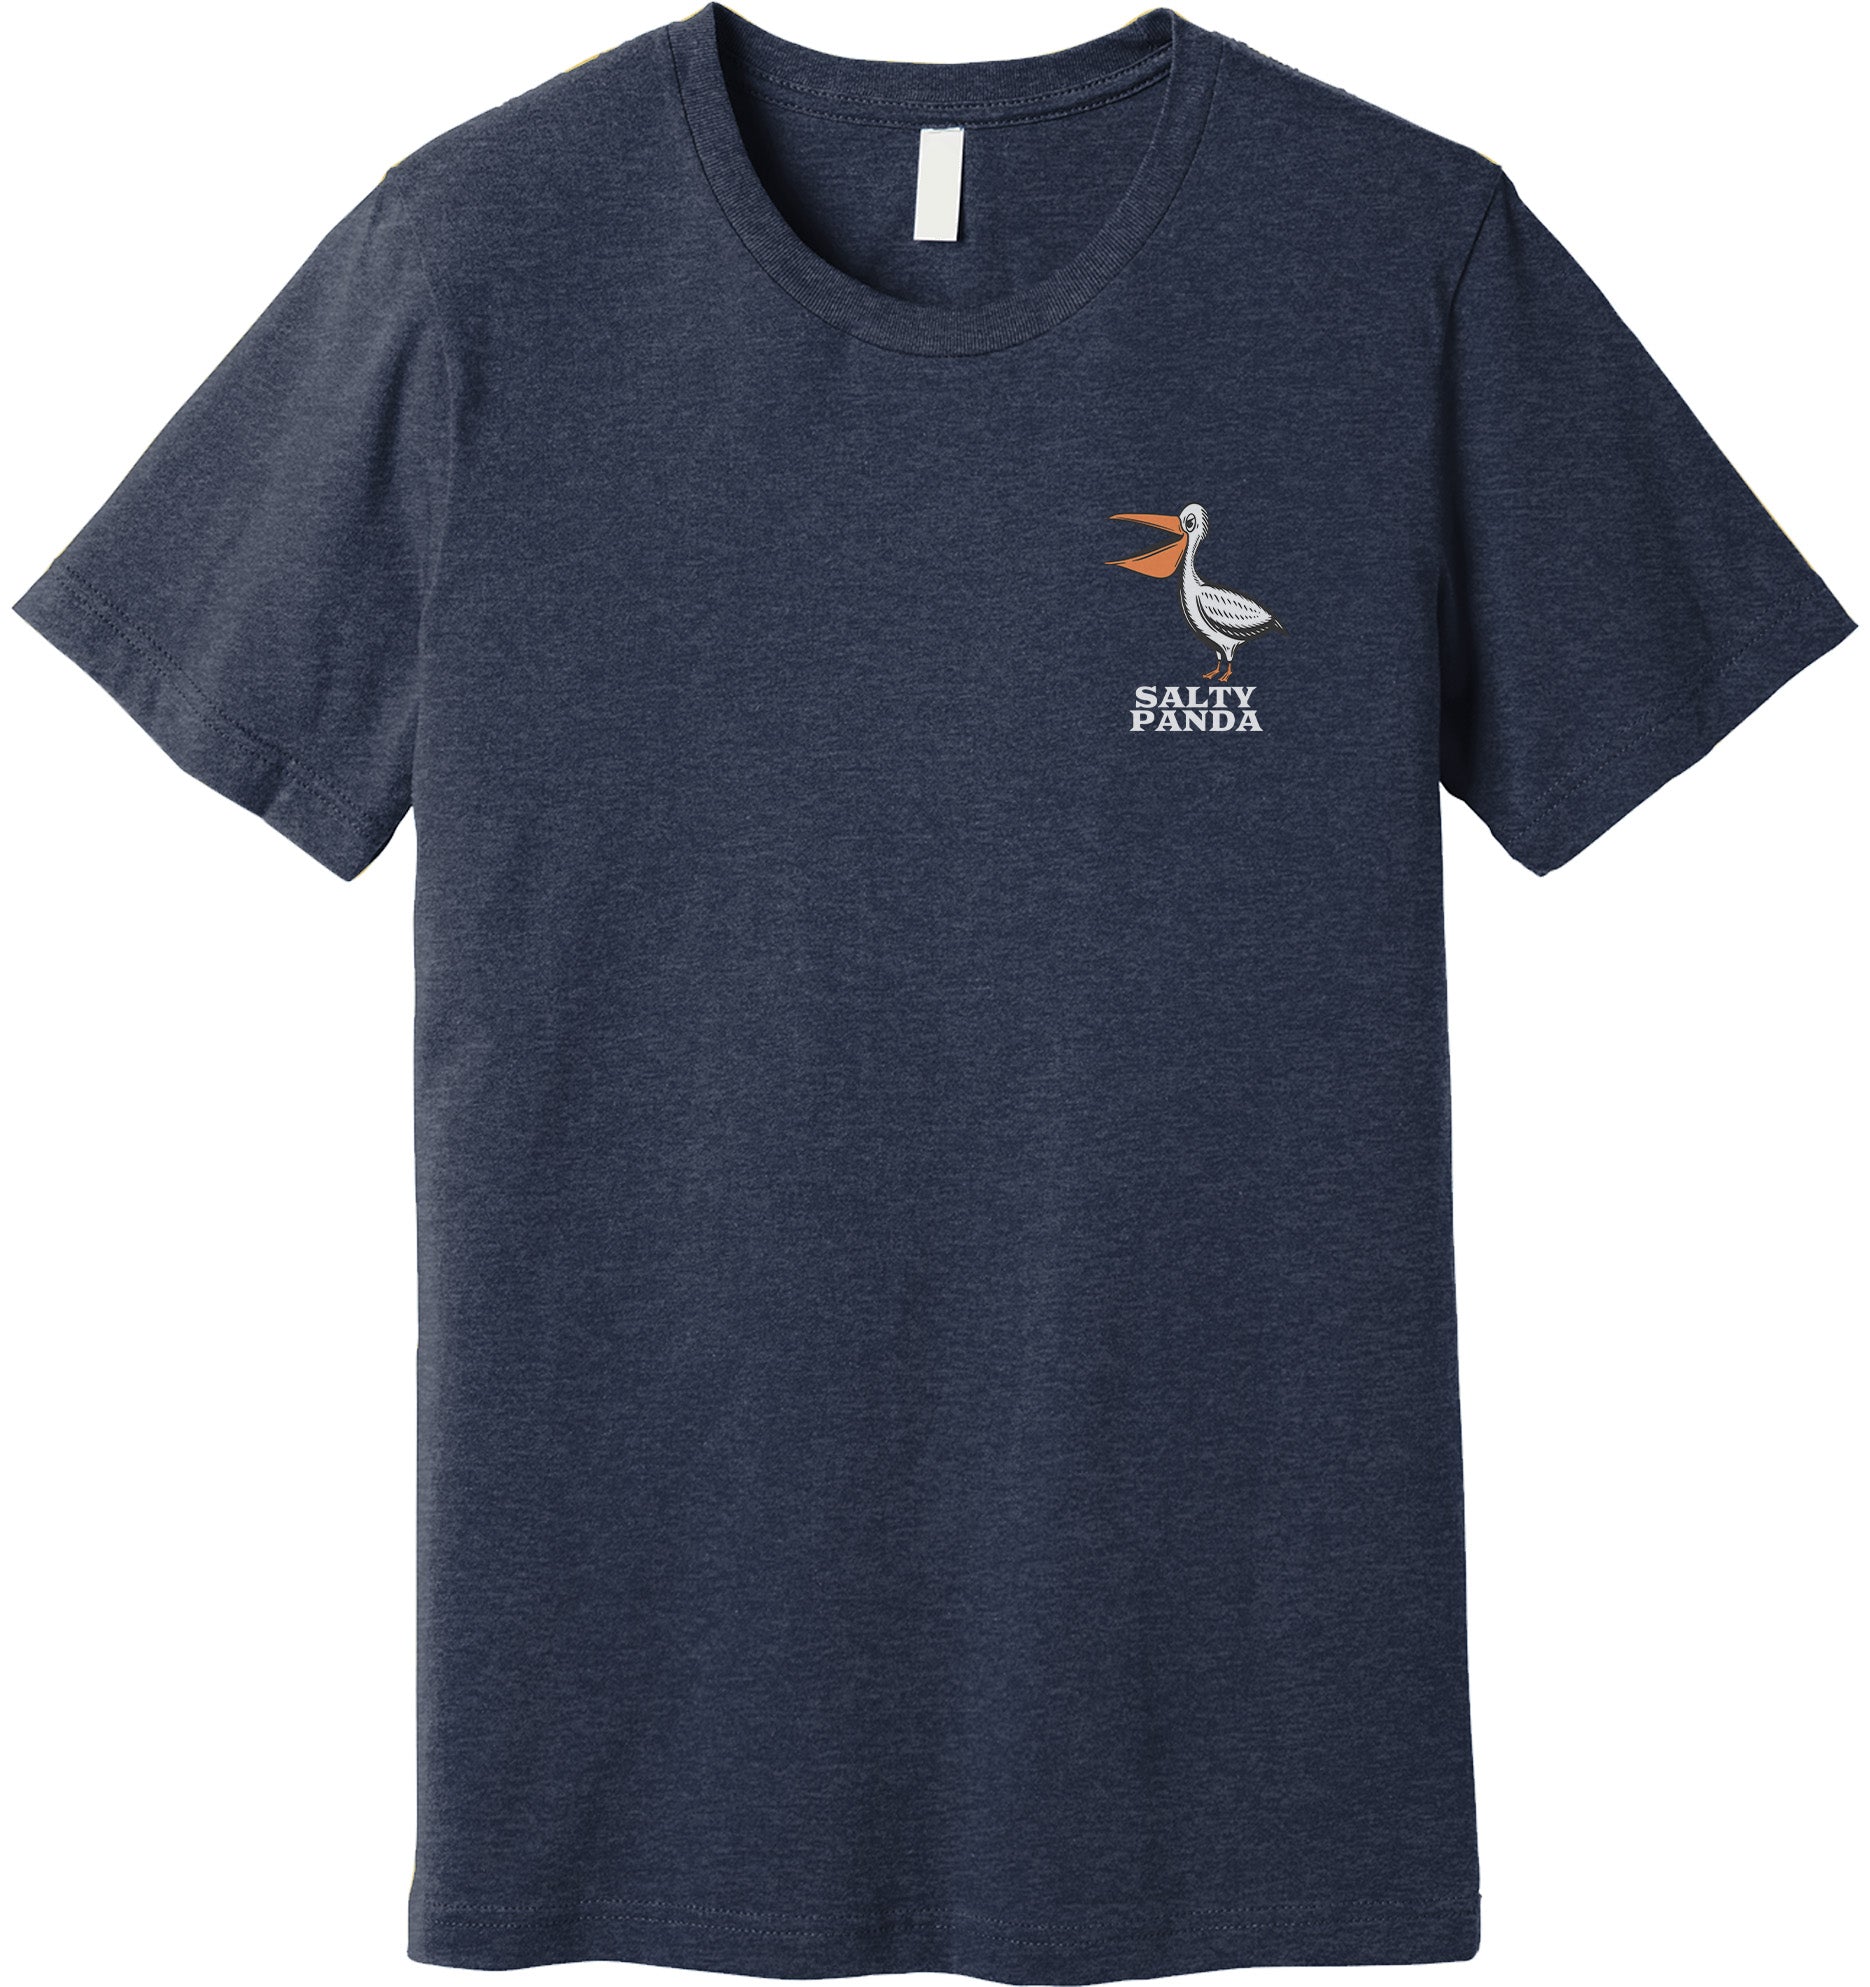 Pelican Bay T-Shirt